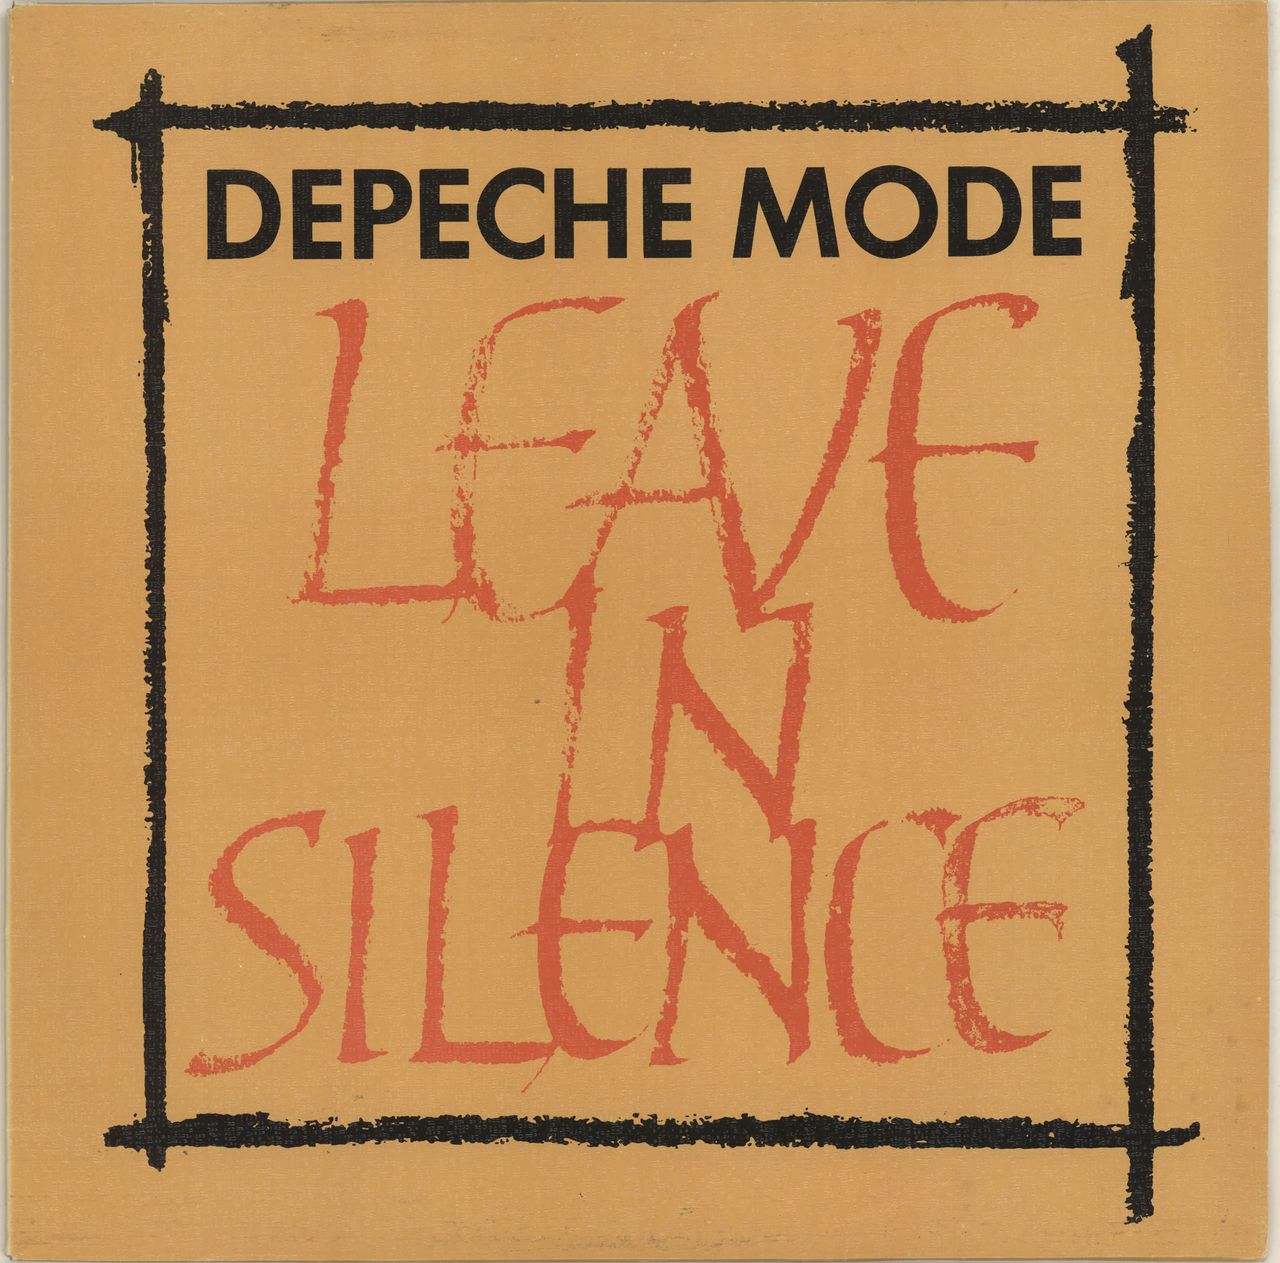 Mode Leave Silence - Textured Sleeve - EX 12" vinyl — RareVinyl.com